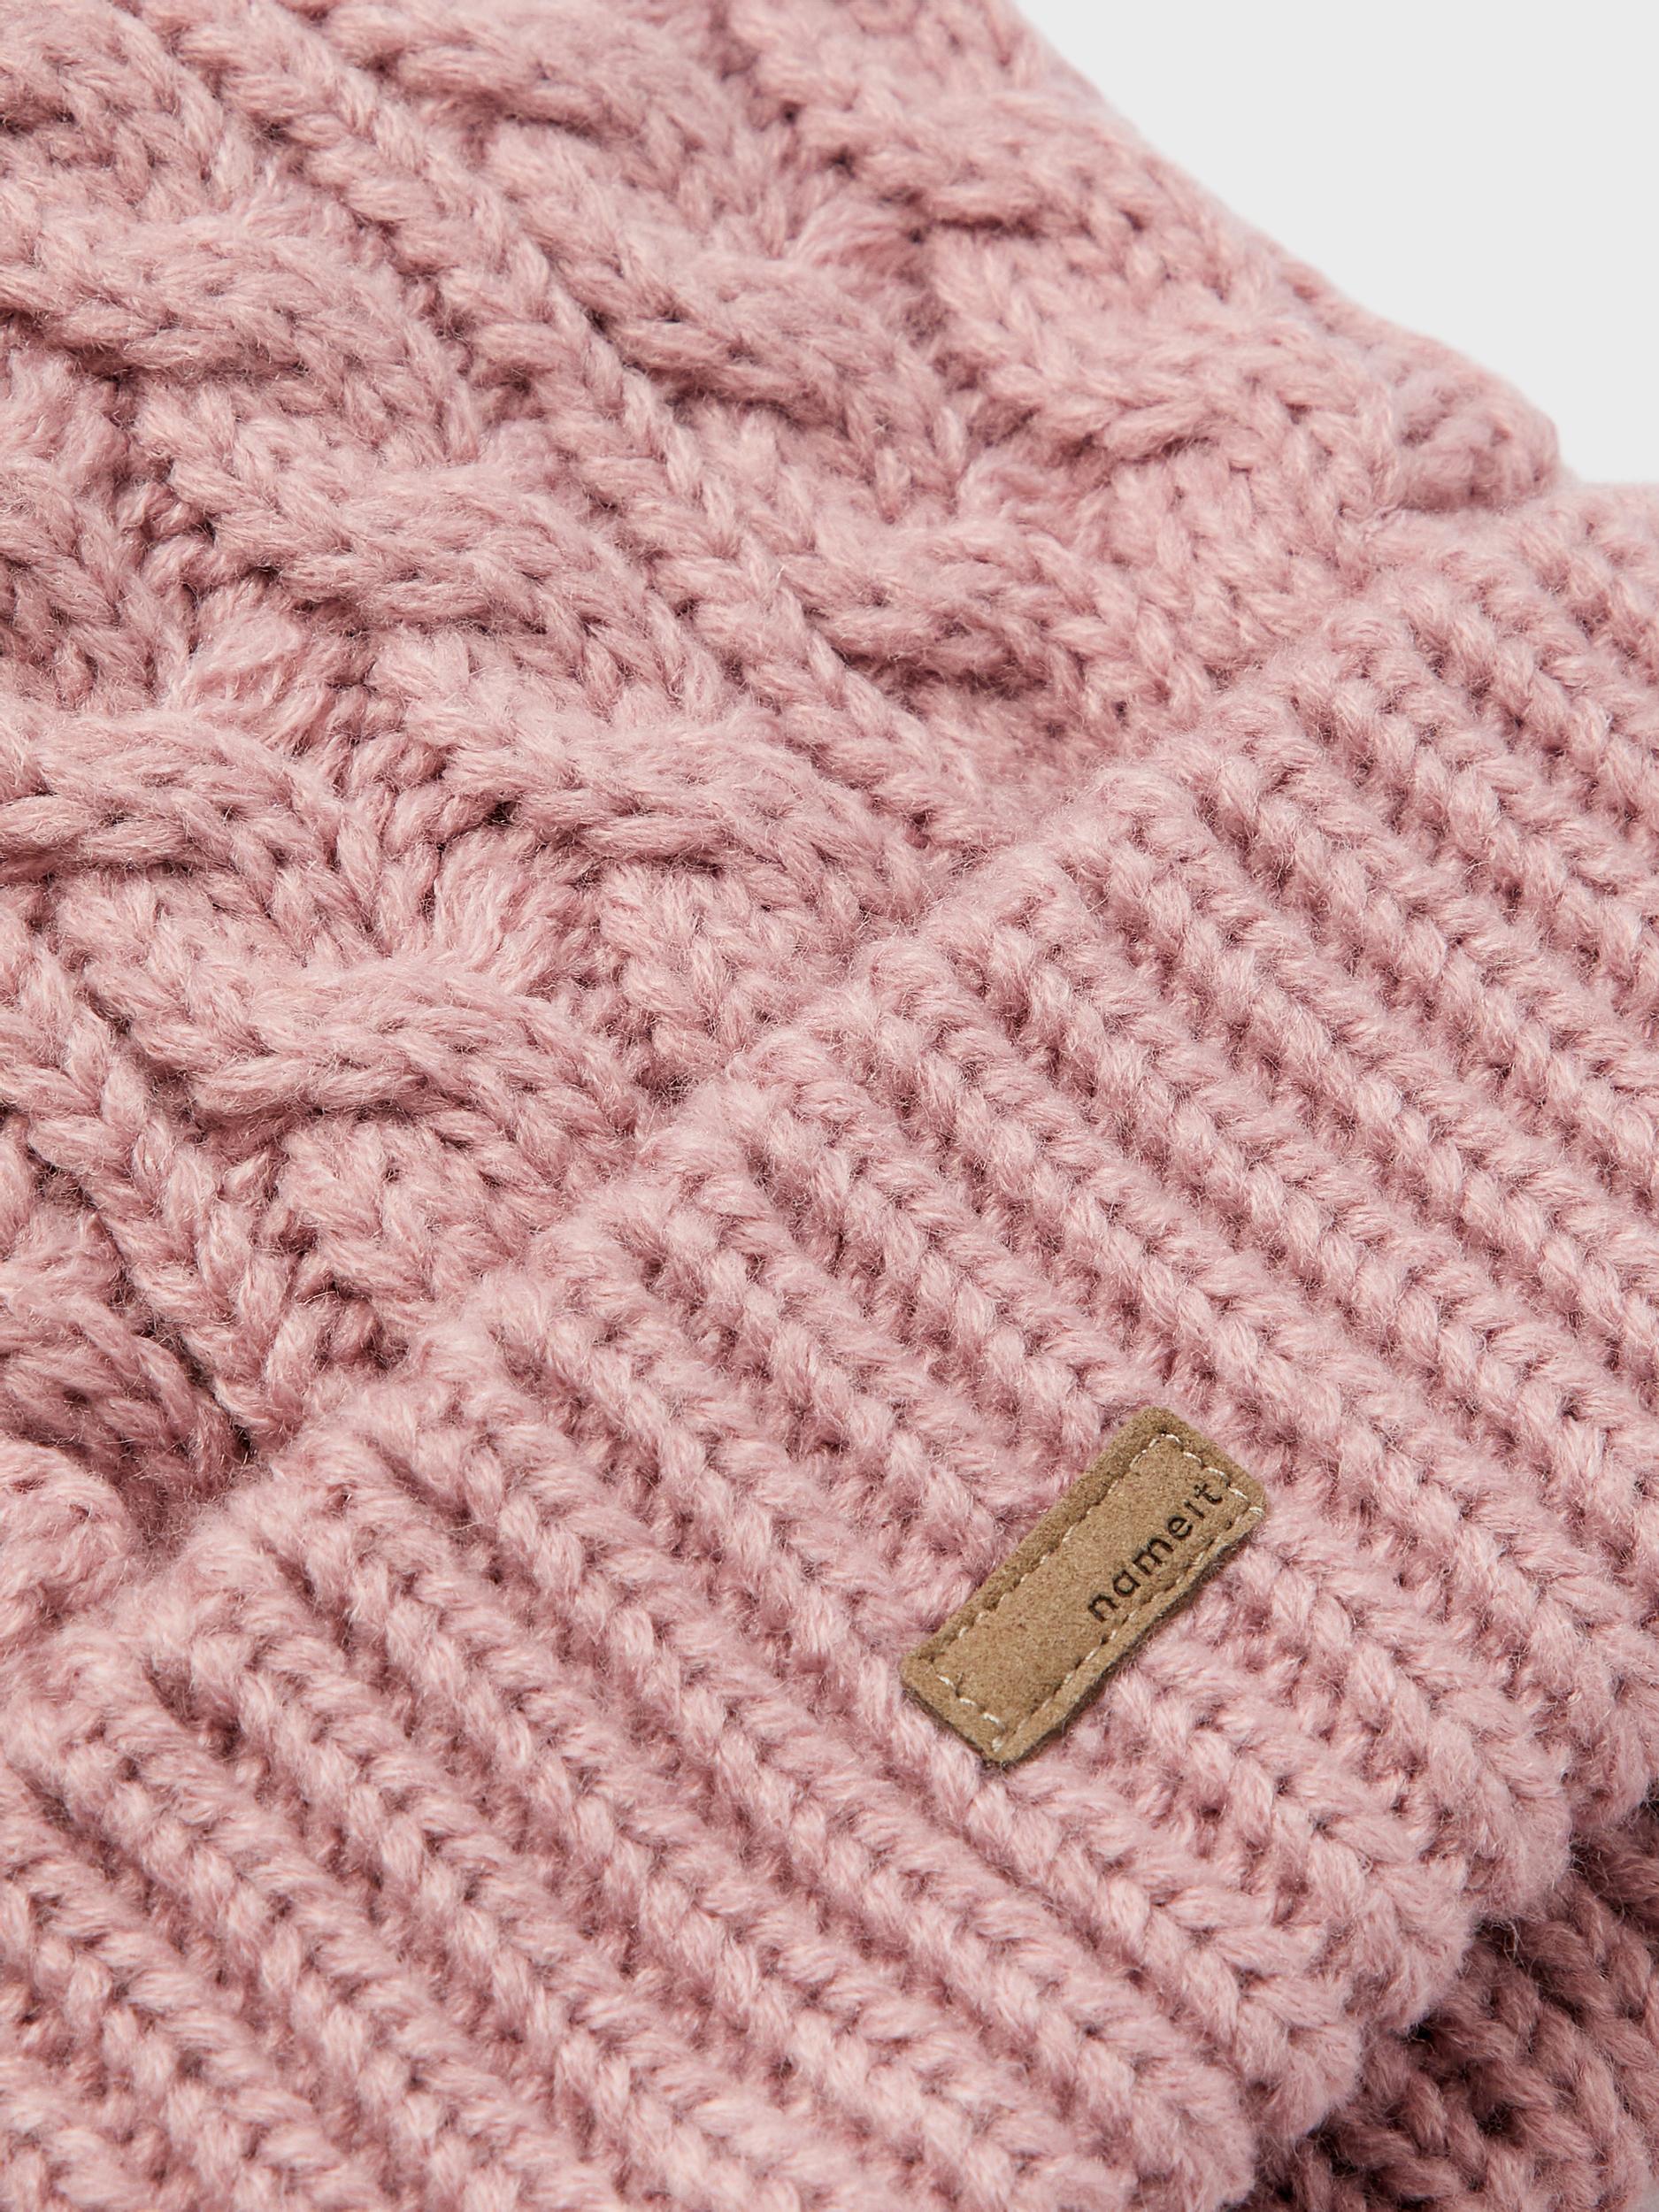 Girl's Meka Knit Hat Zephyr-Close Up View